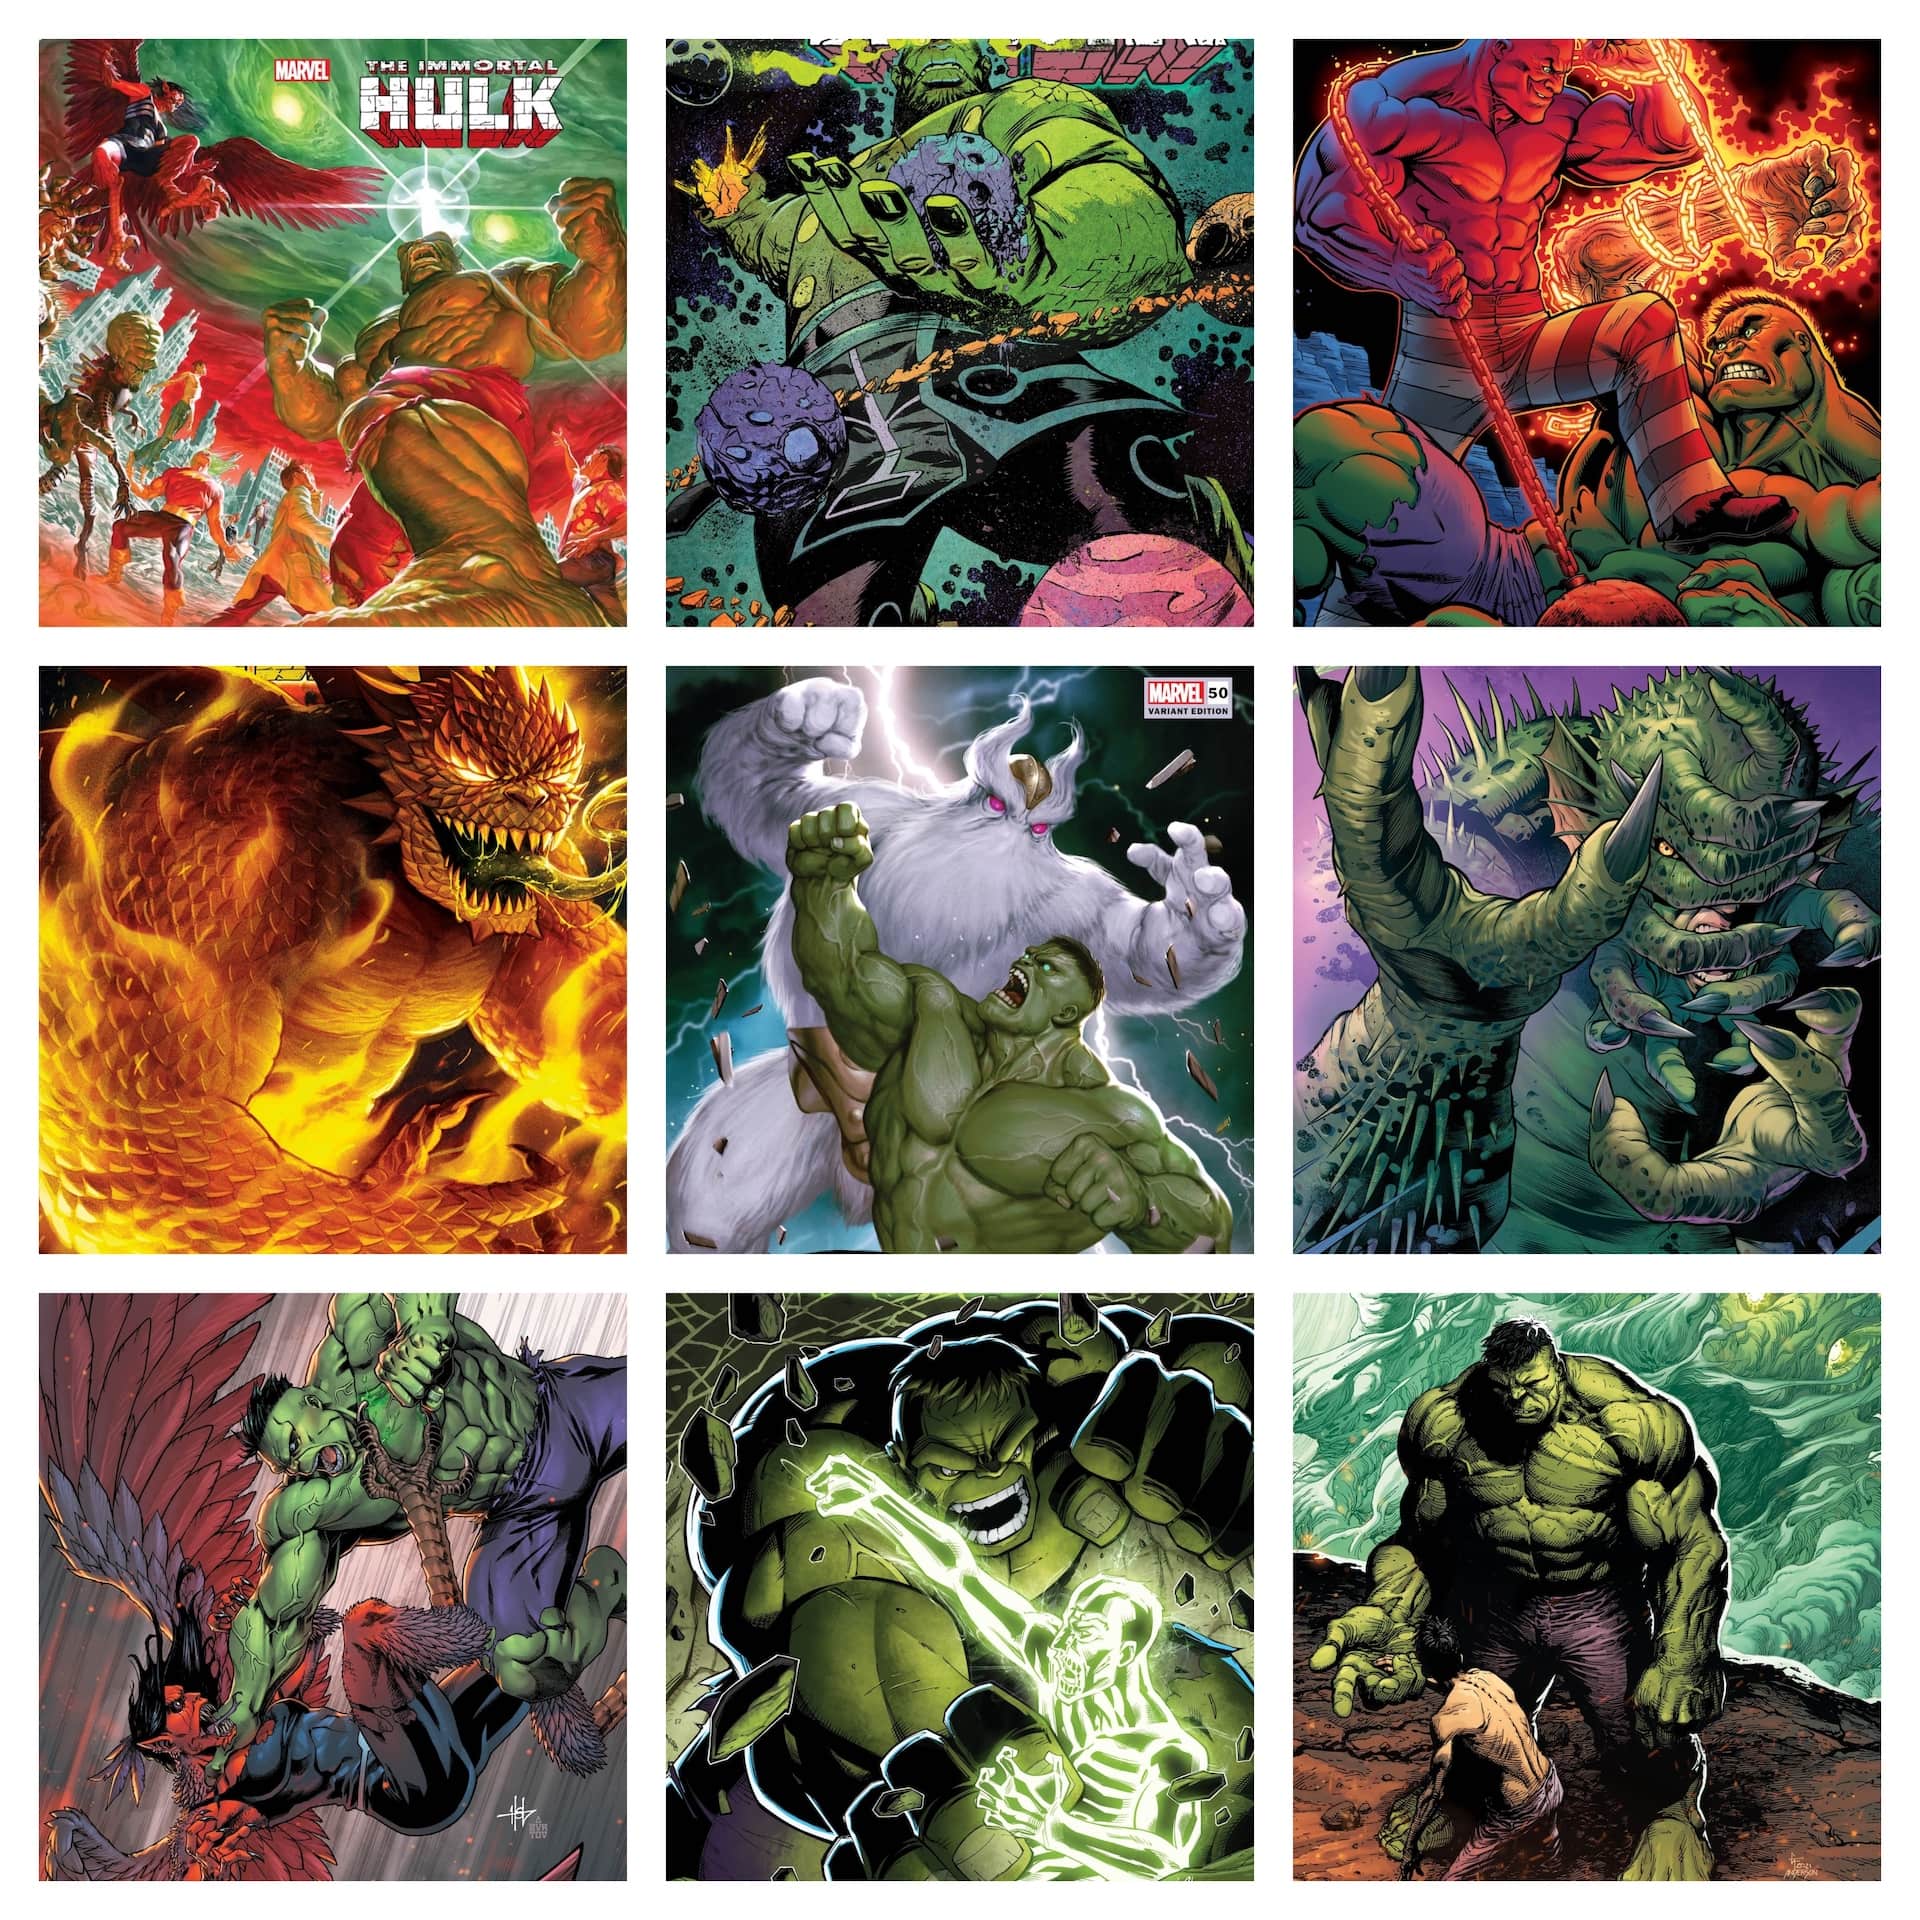 Immortal Hulk #50 - Marvel explains why the Hulk was created